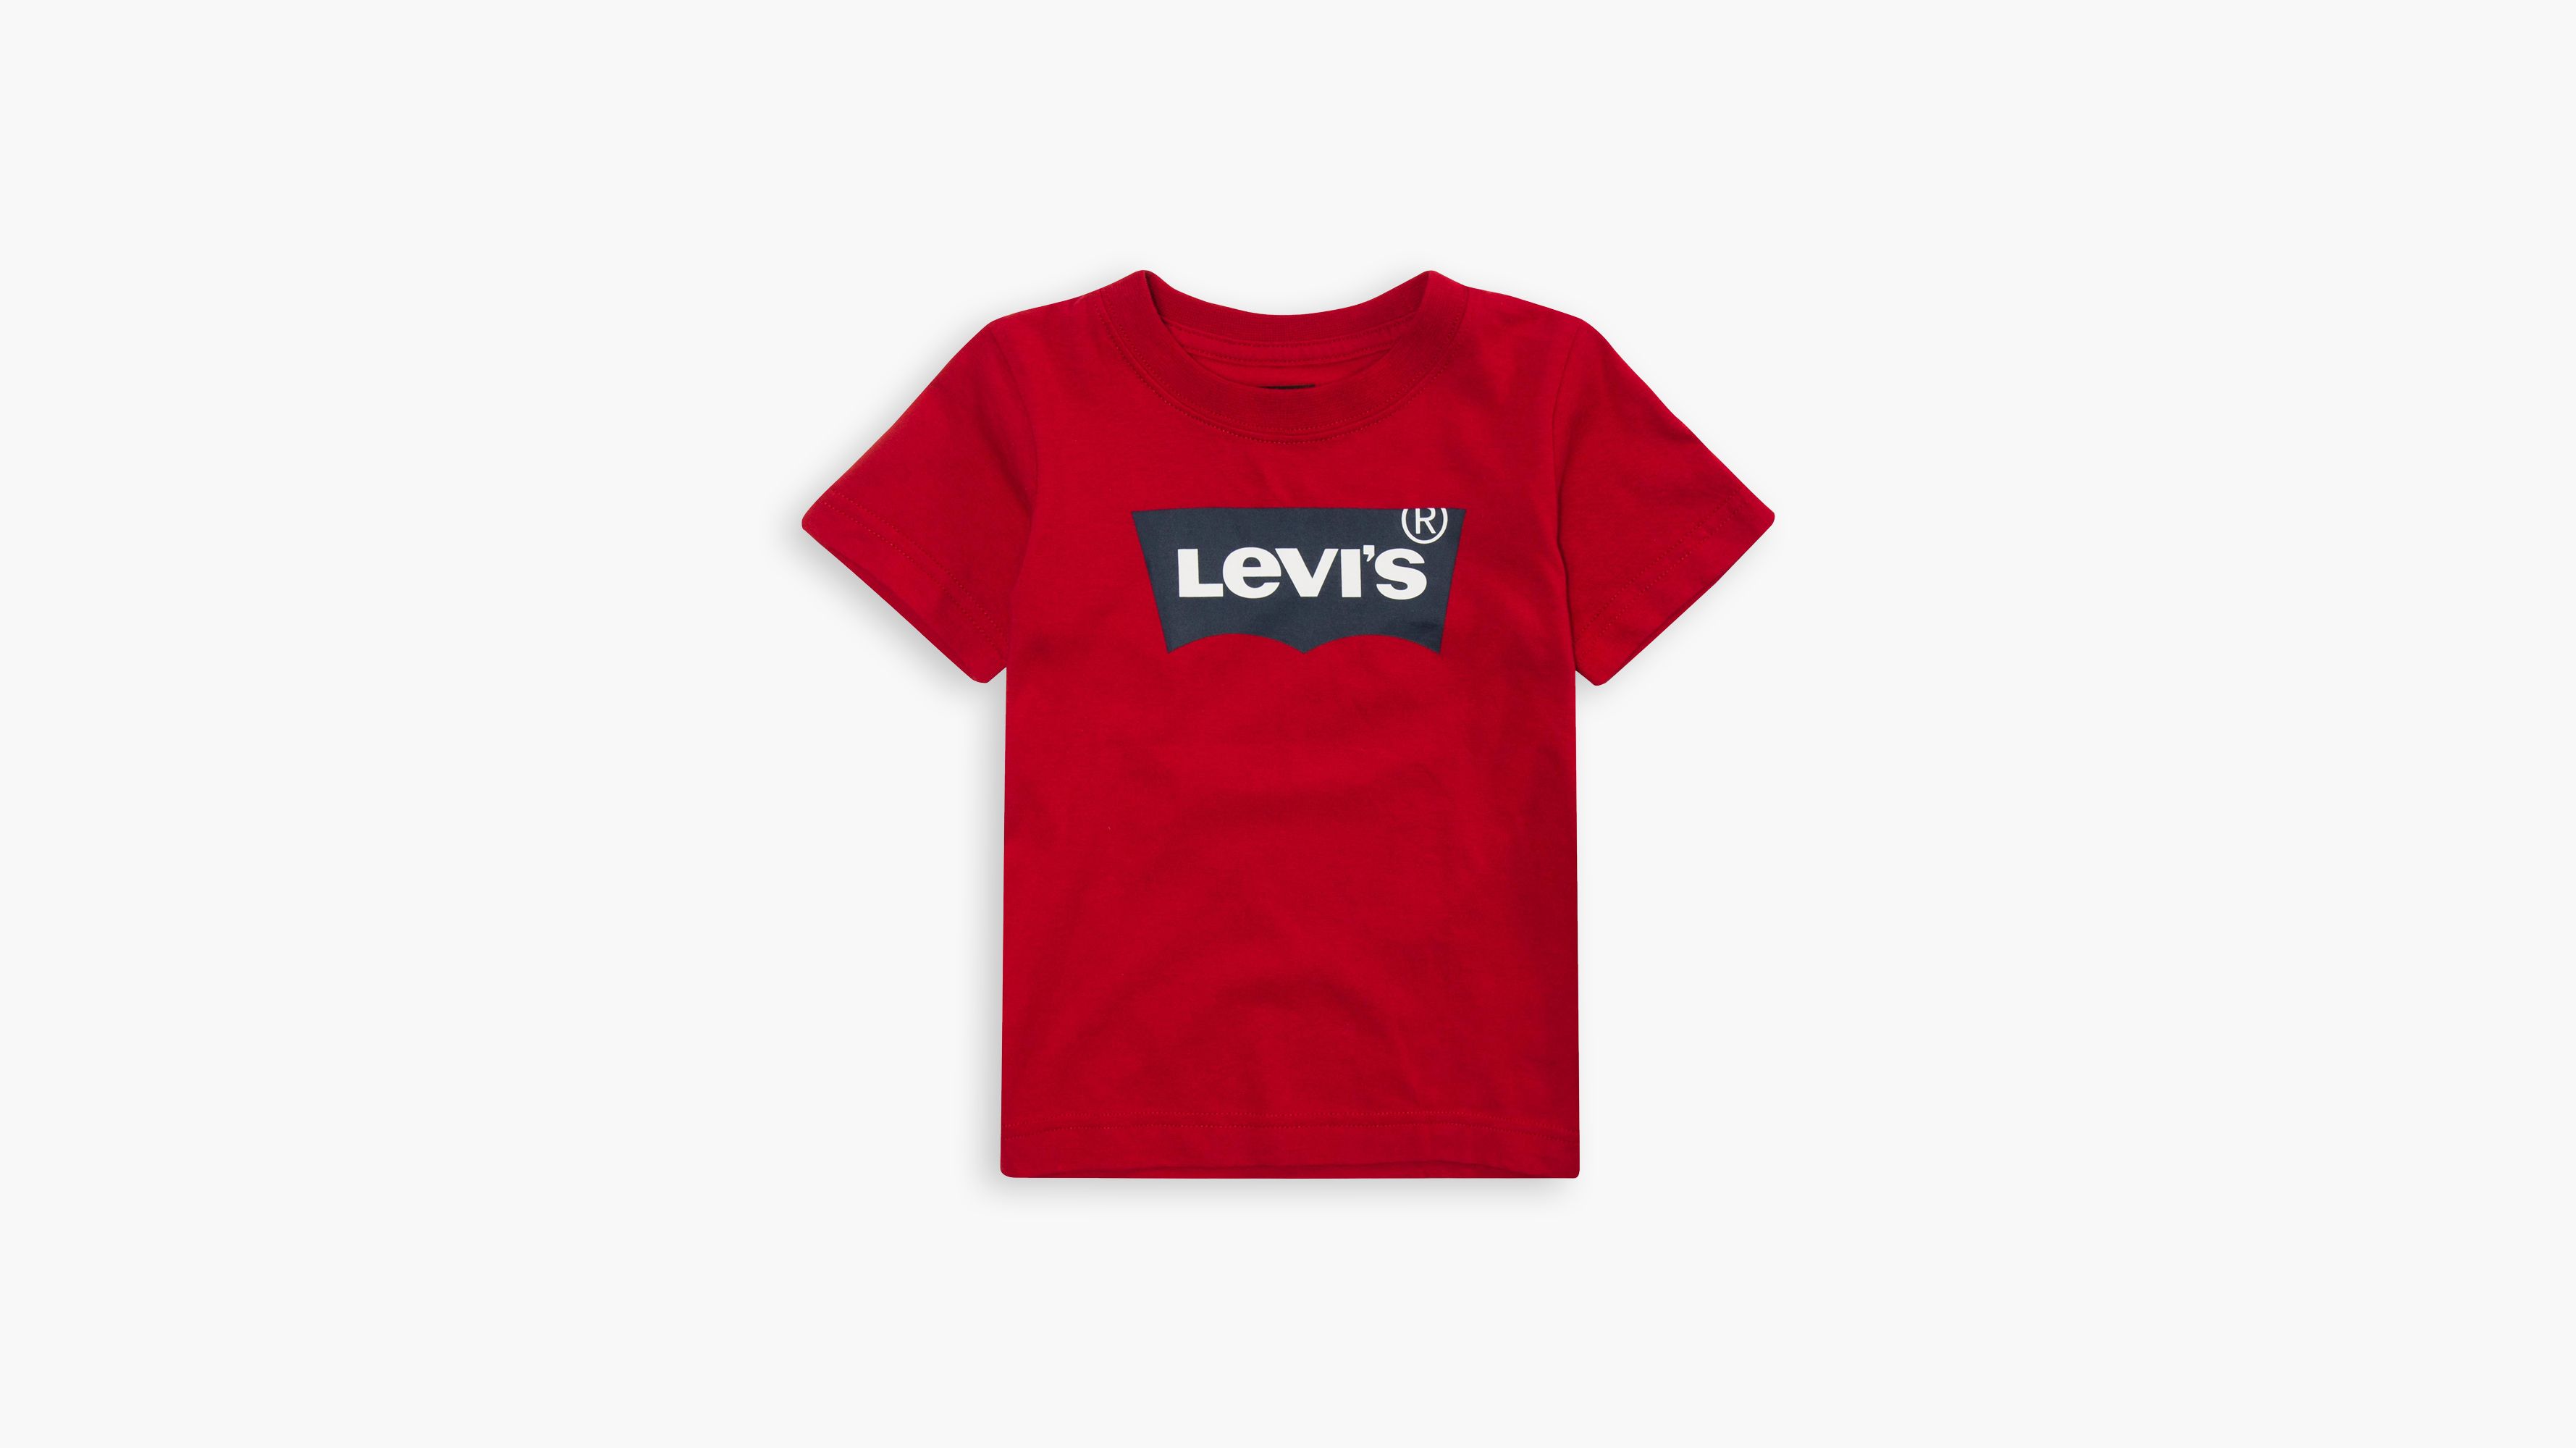 levis baby tshirt